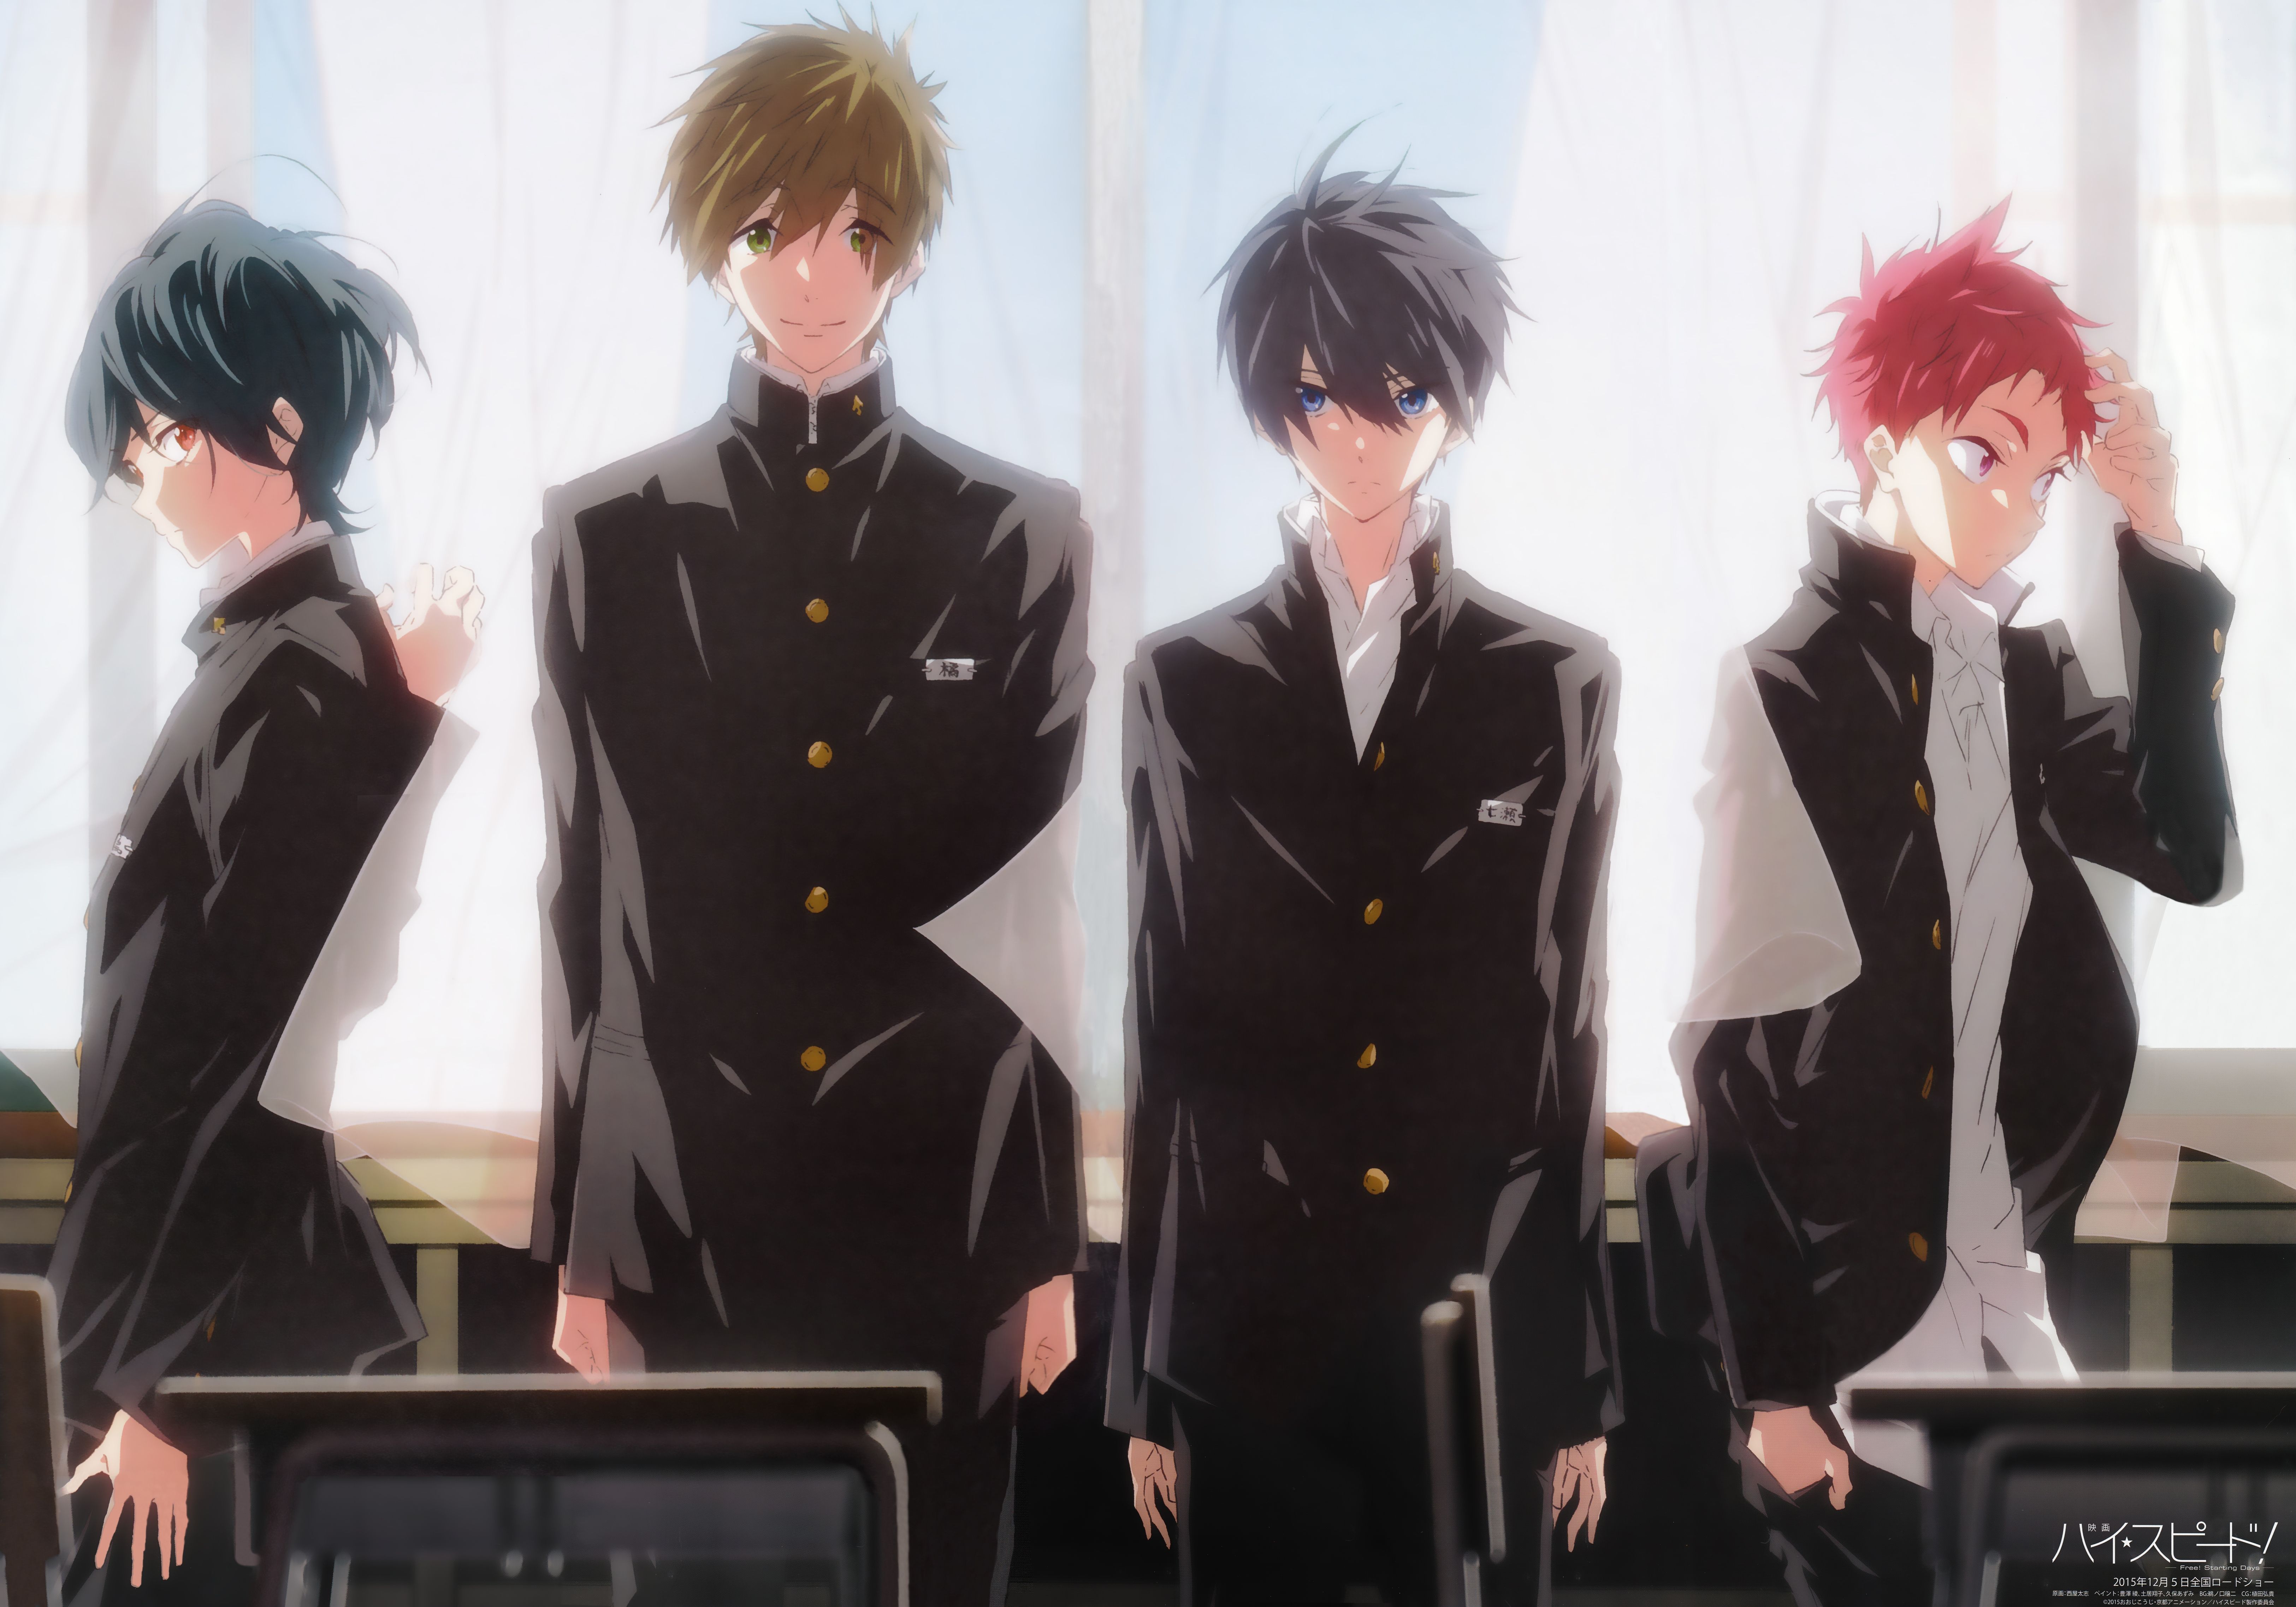 Wallpaper Anime Guys Boy School Uniform Free Eternal Anime High